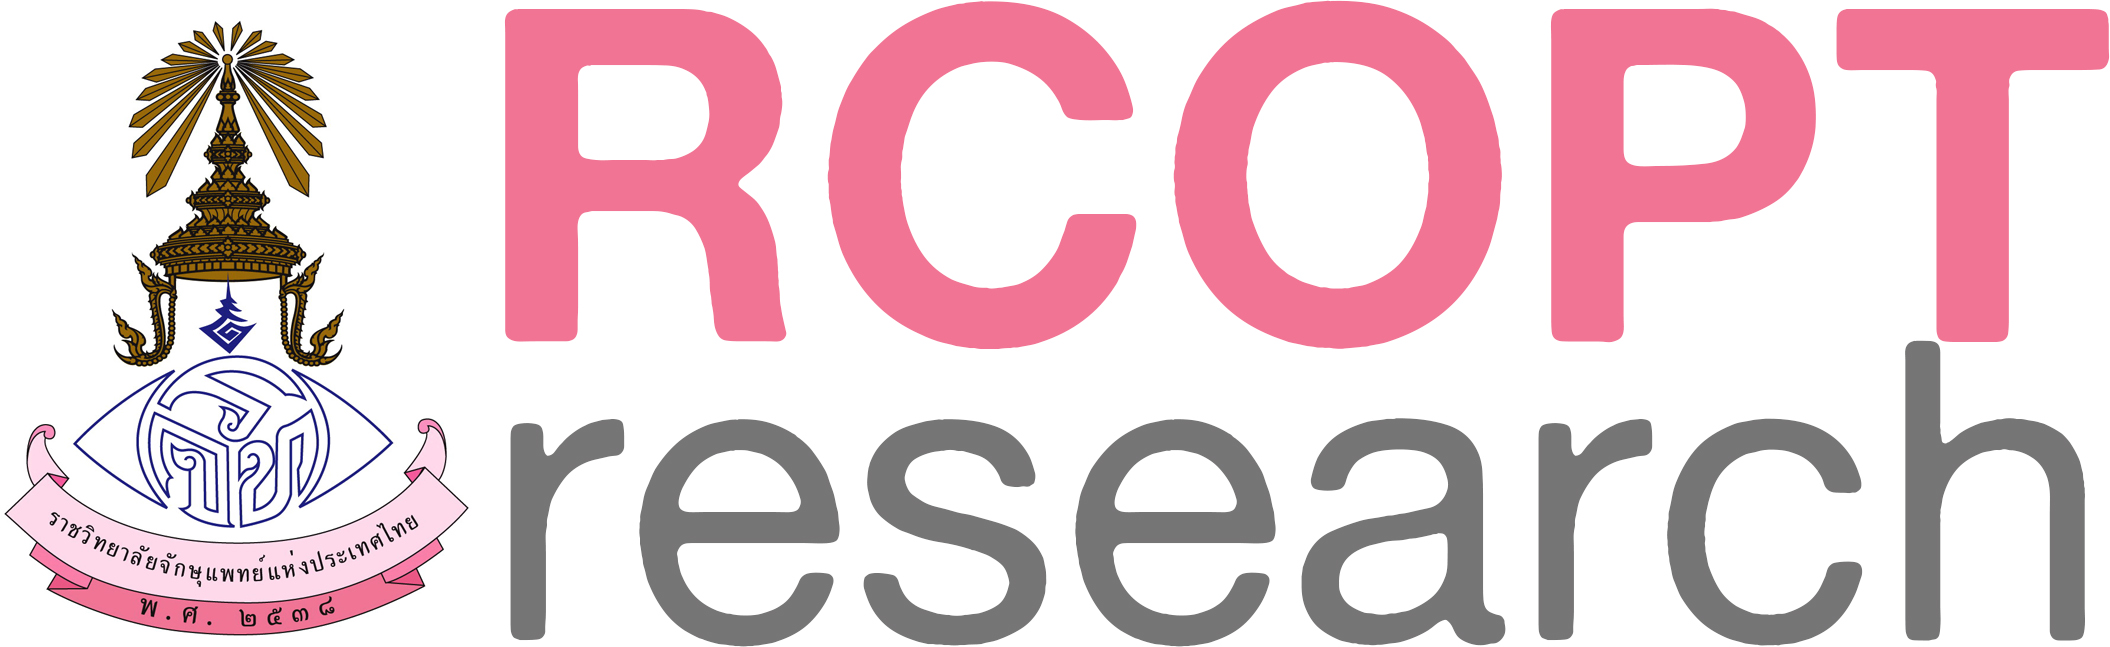 RCOPT research logo1.jpg